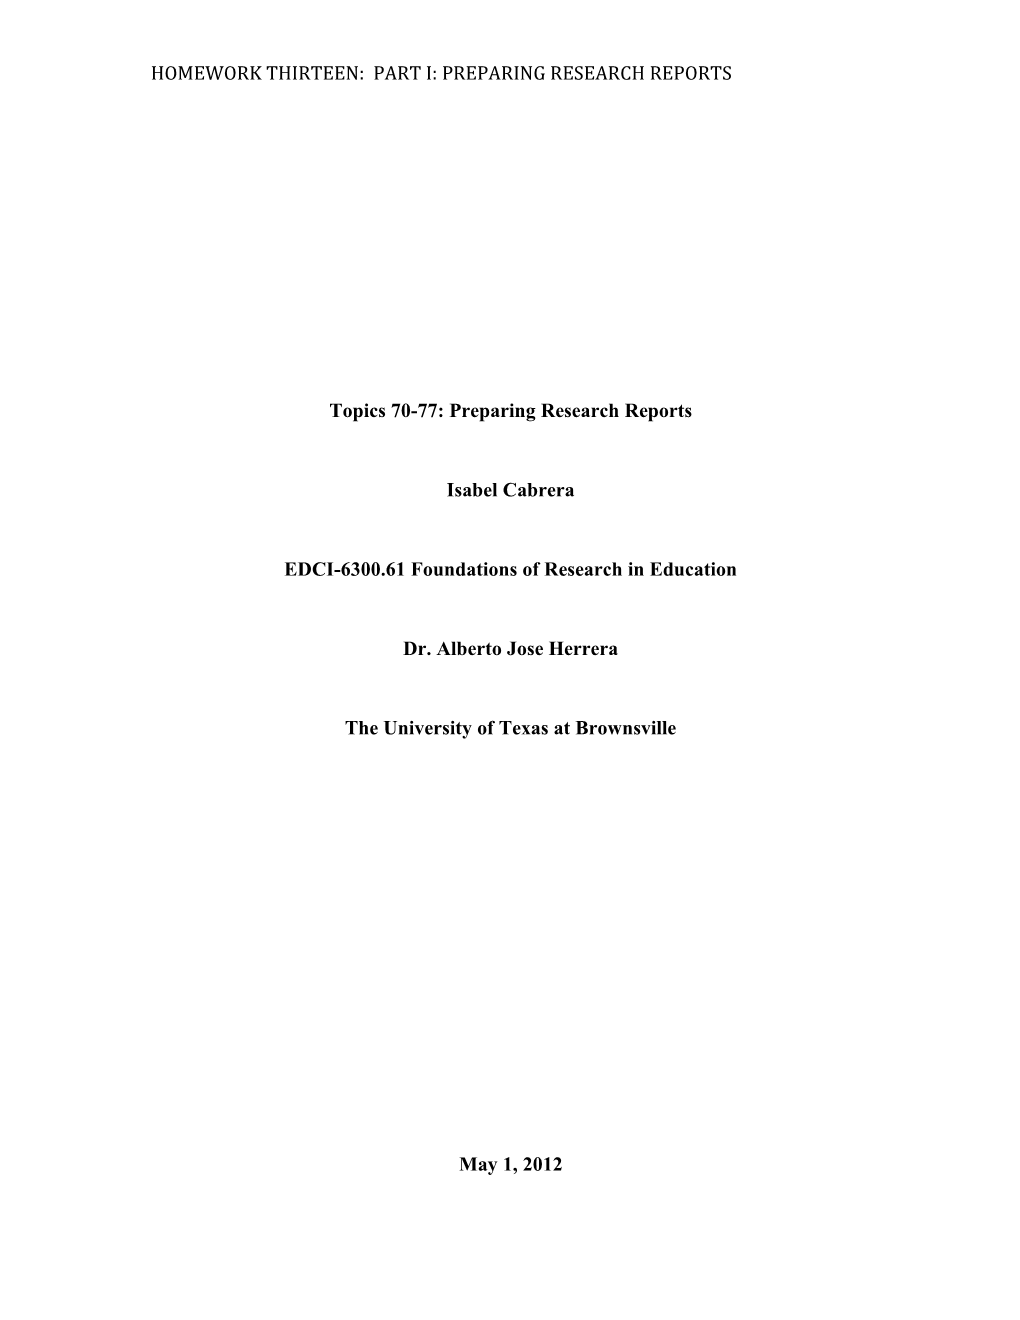 Topics 70-77: Preparing Research Reports